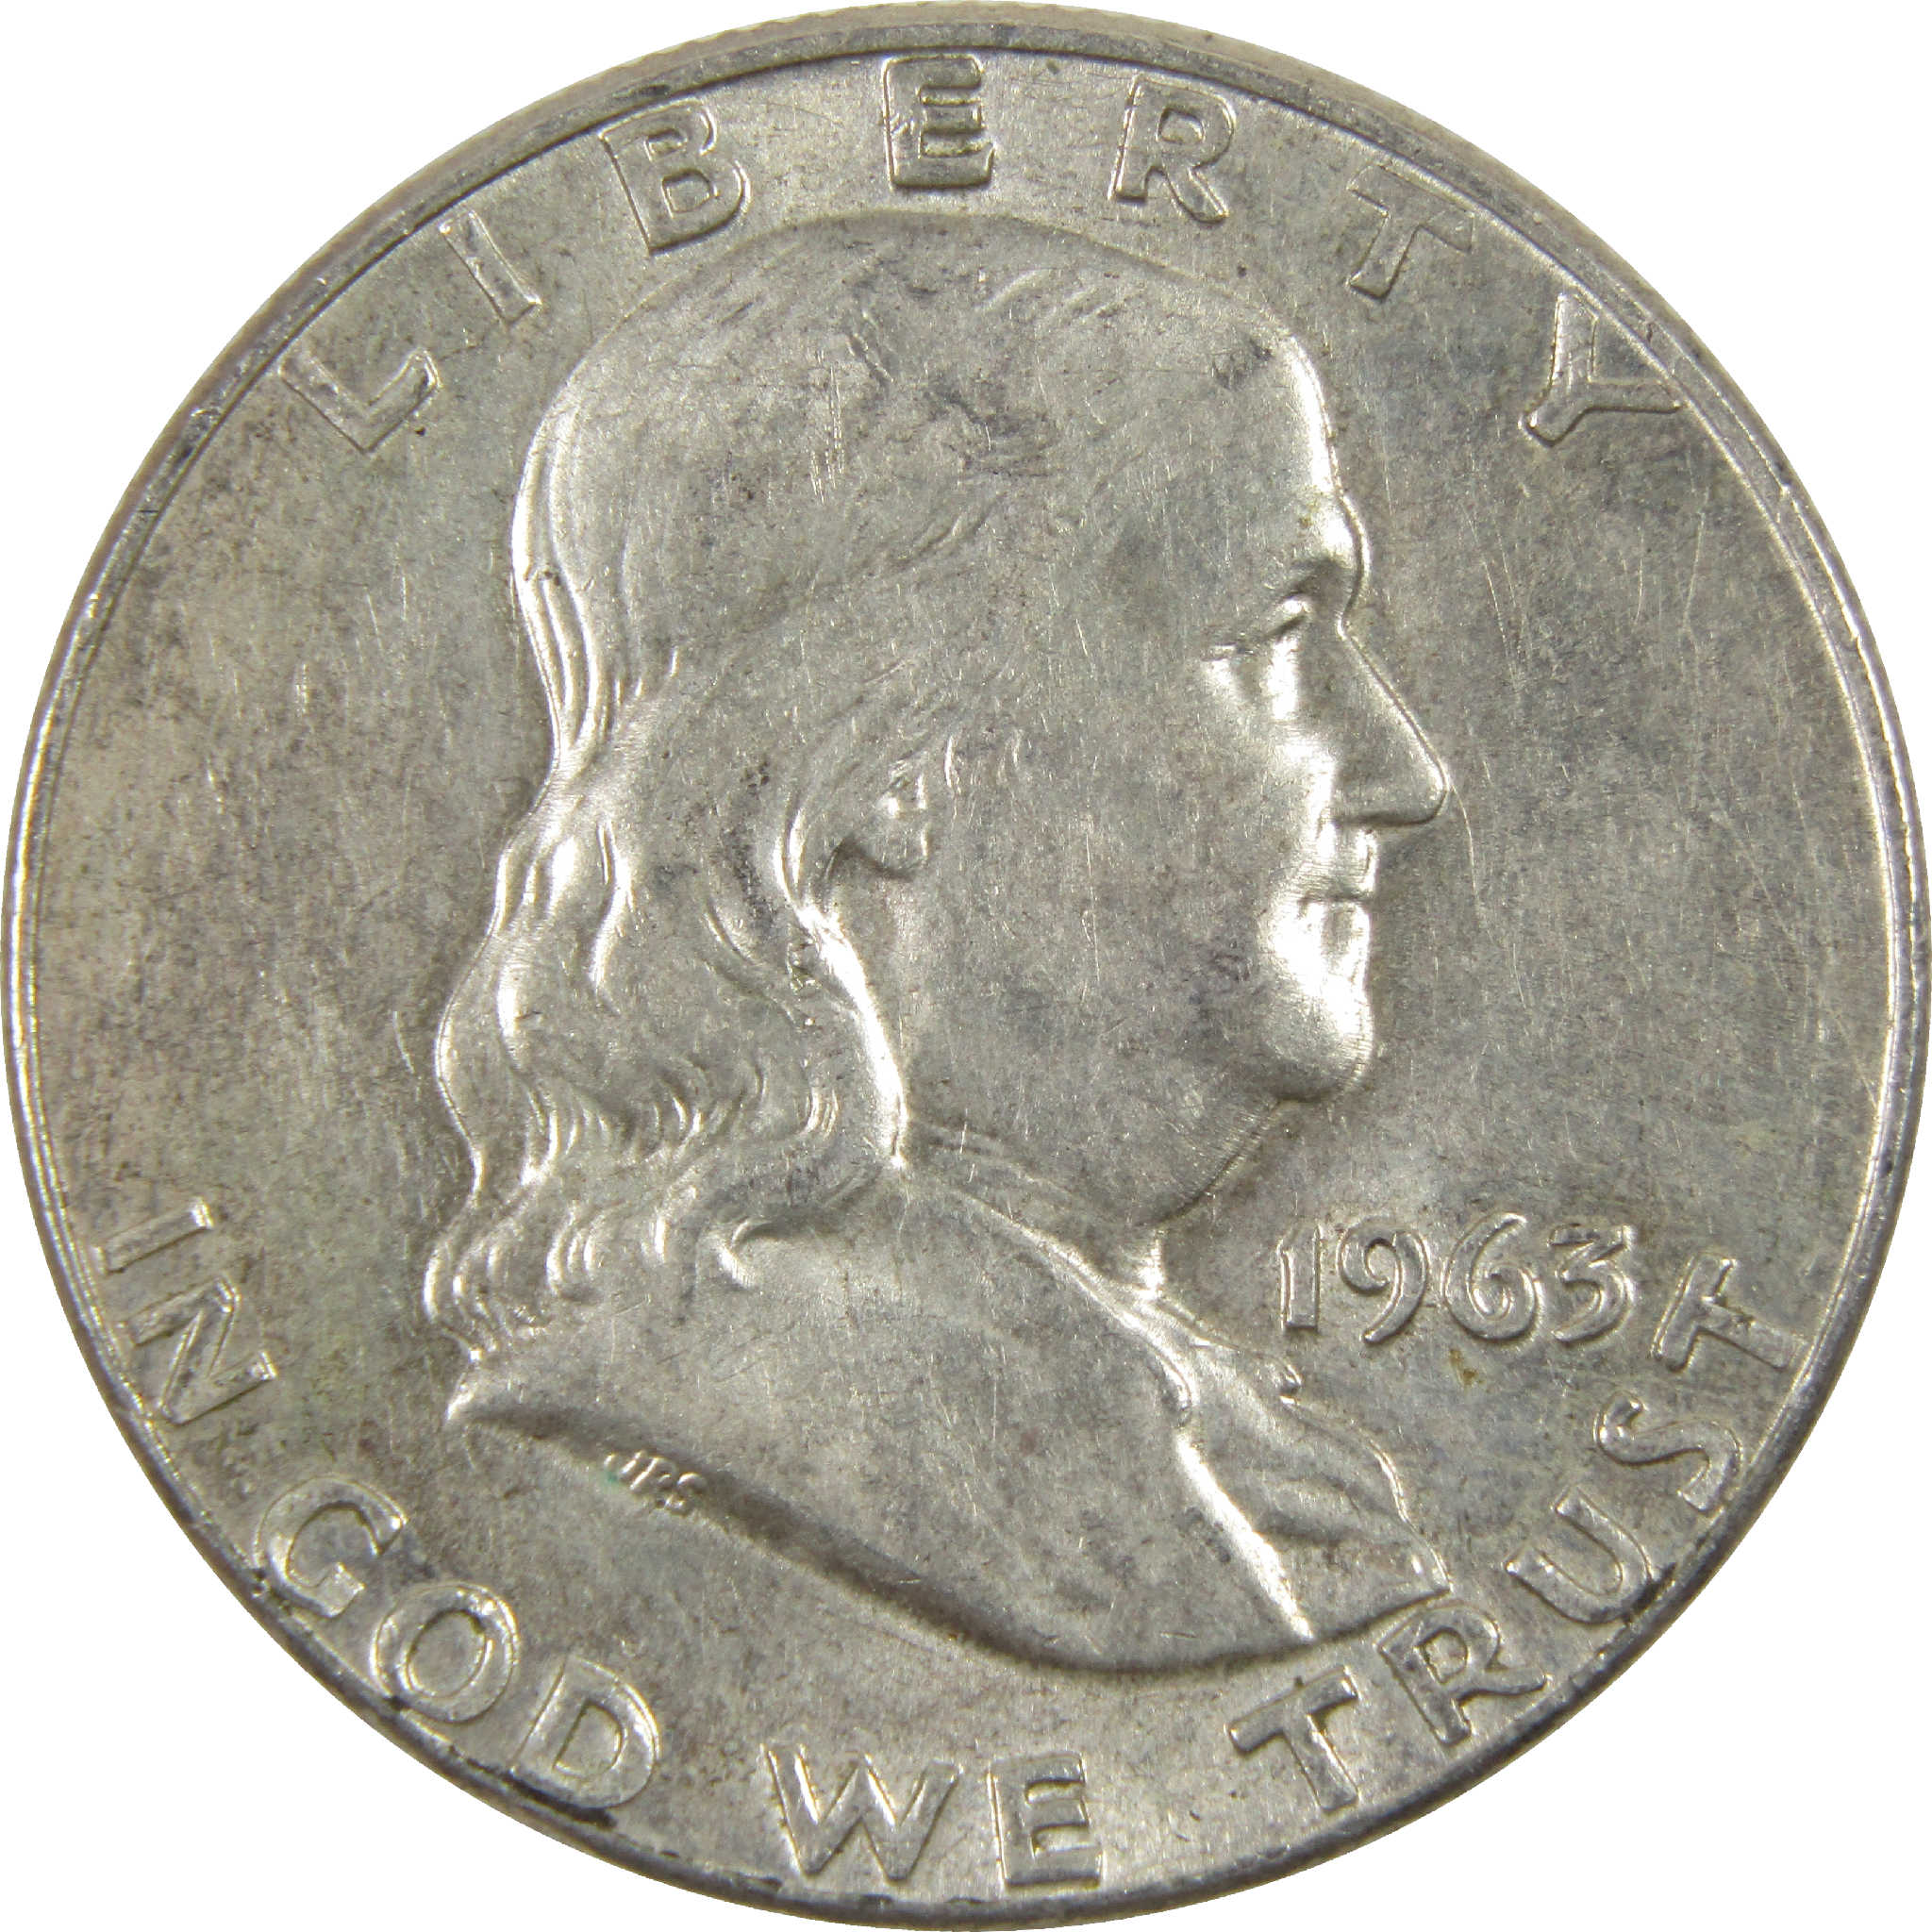 1963 D Franklin Half Dollar G Good Silver 50c Coin